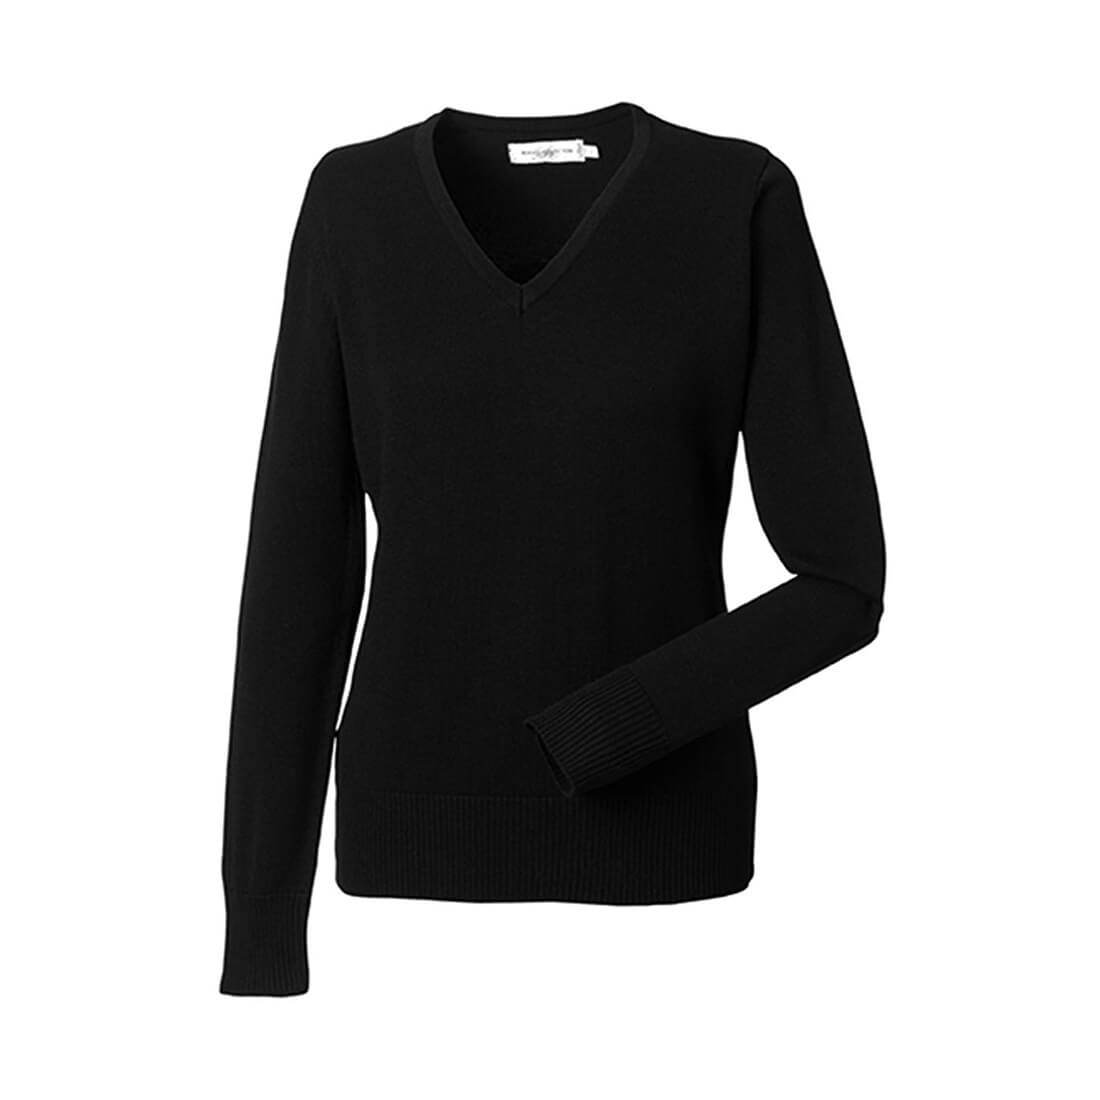 Ladies’ V-Neck Knitted Pullover - Les vêtements de protection